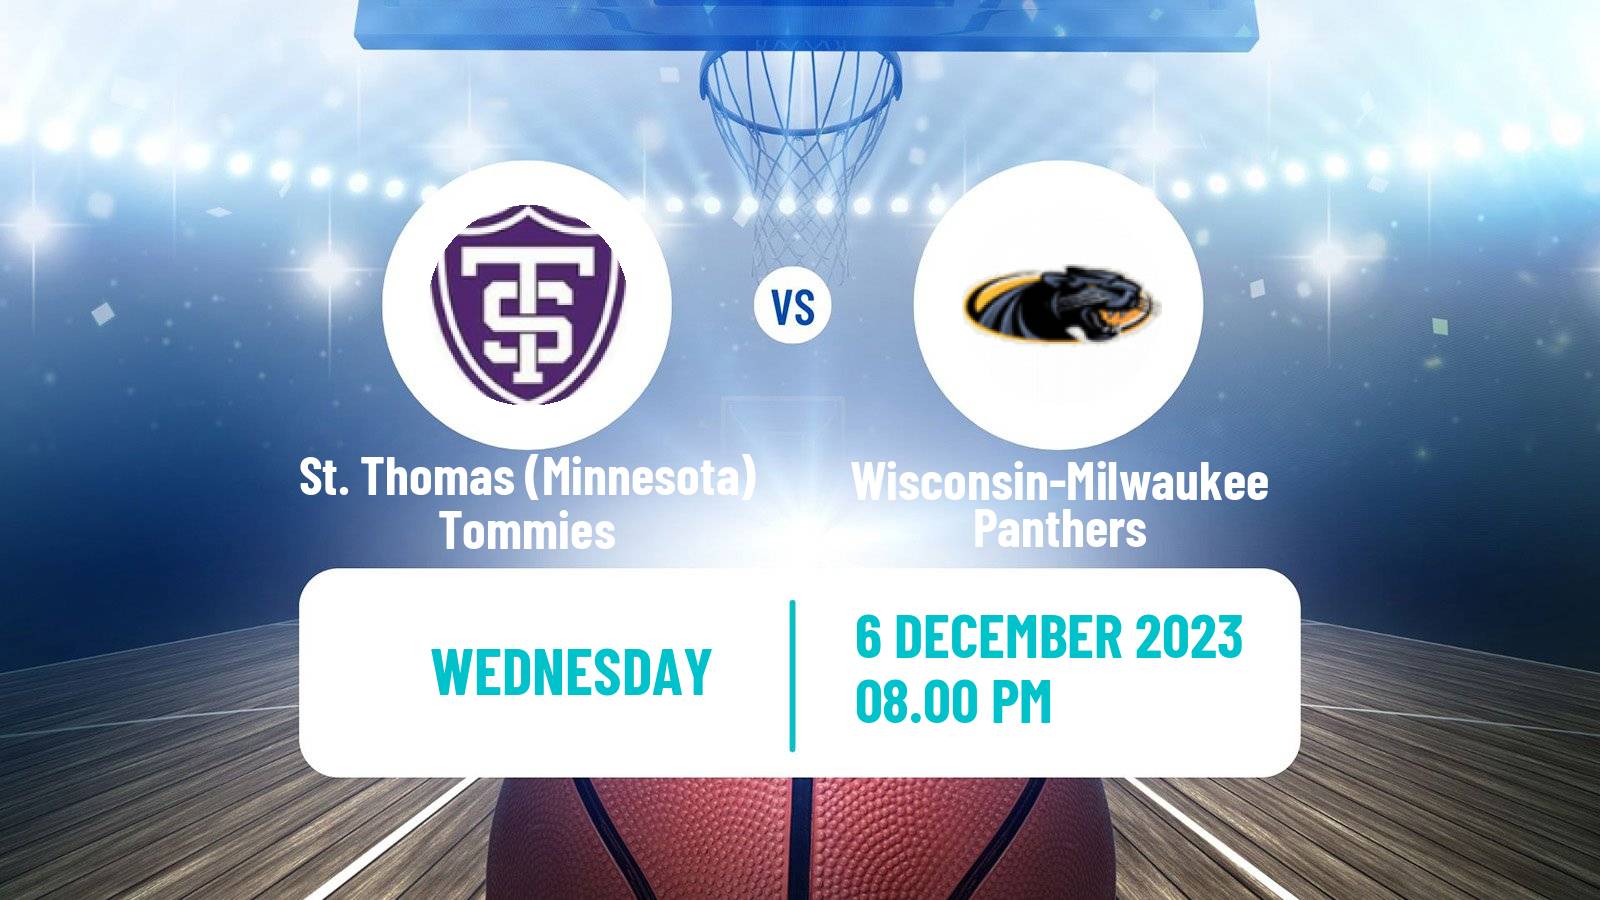 Basketball NCAA College Basketball St. Thomas (Minnesota) Tommies - Wisconsin-Milwaukee Panthers